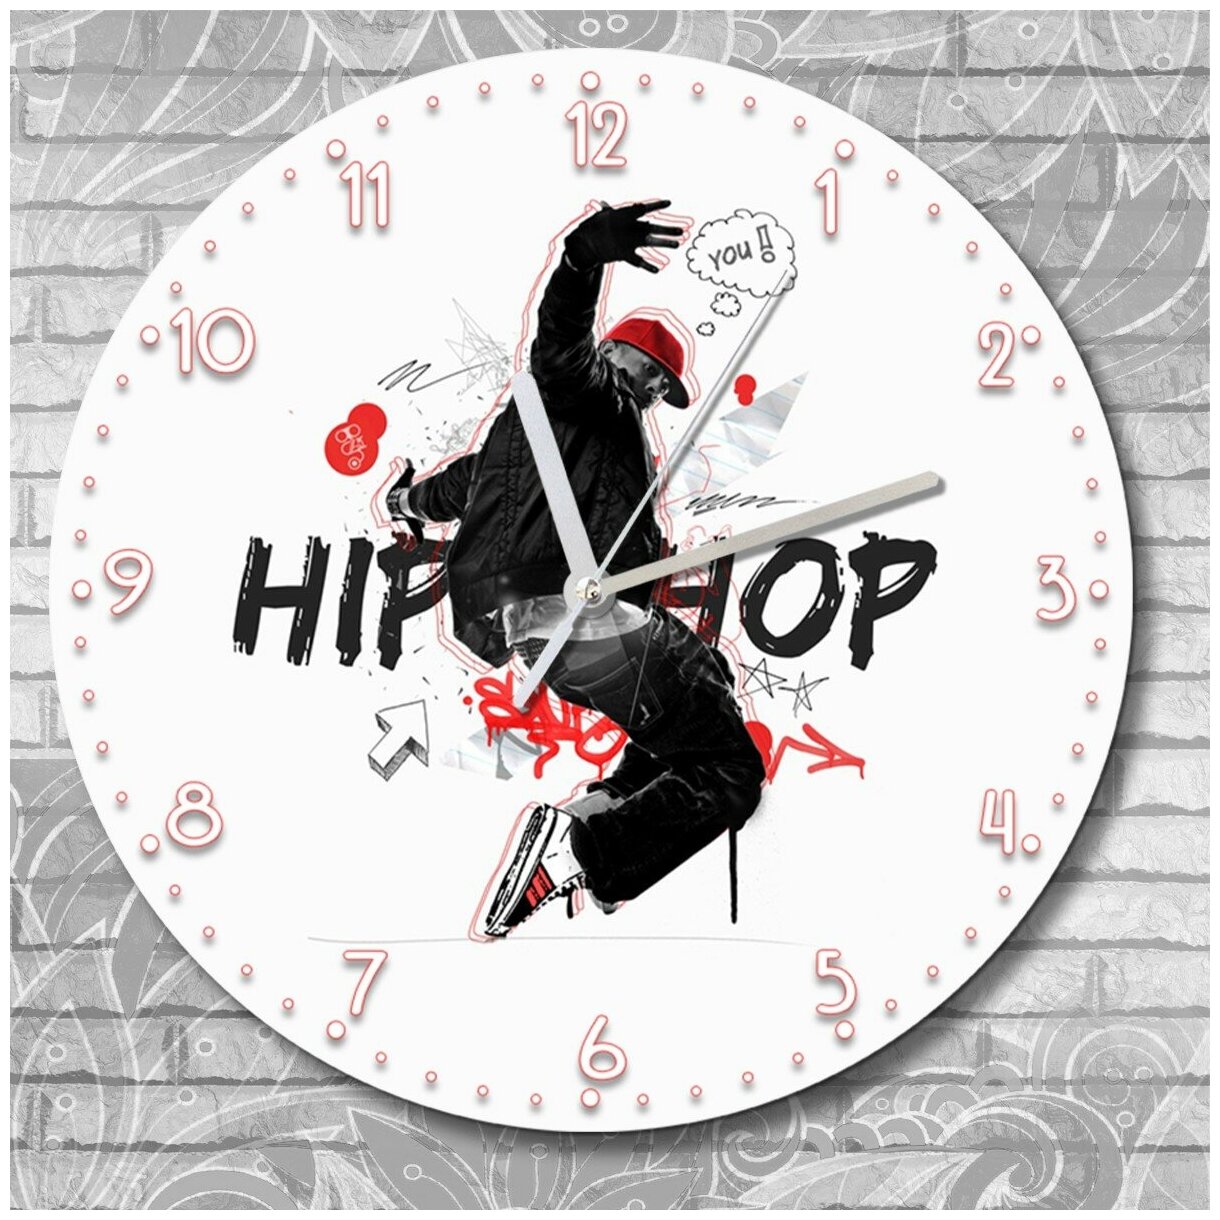 Настенные часы УФ музыка (music, rap, hip hop, sound, руки вверх, hands up, style, graffiti, life) - 2056